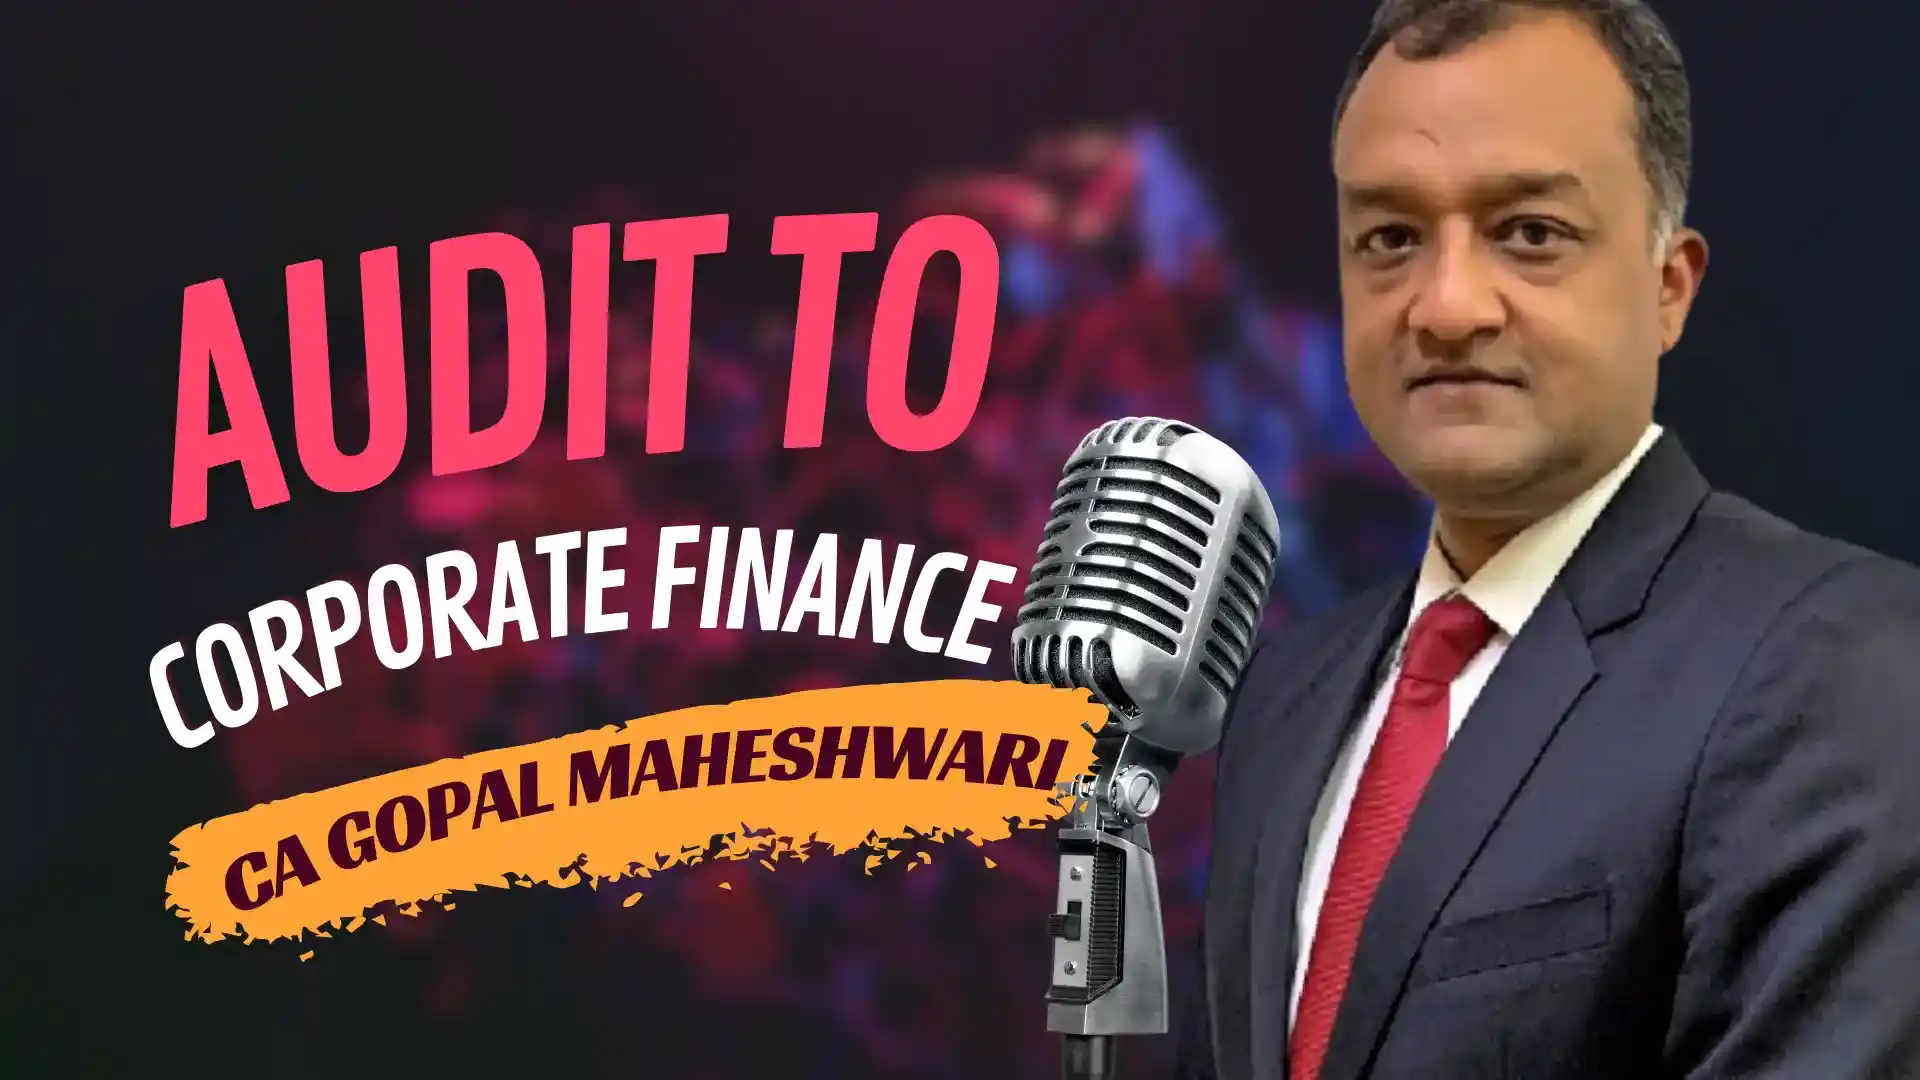 Ca gopal maheshwari audit to corporate finance success story